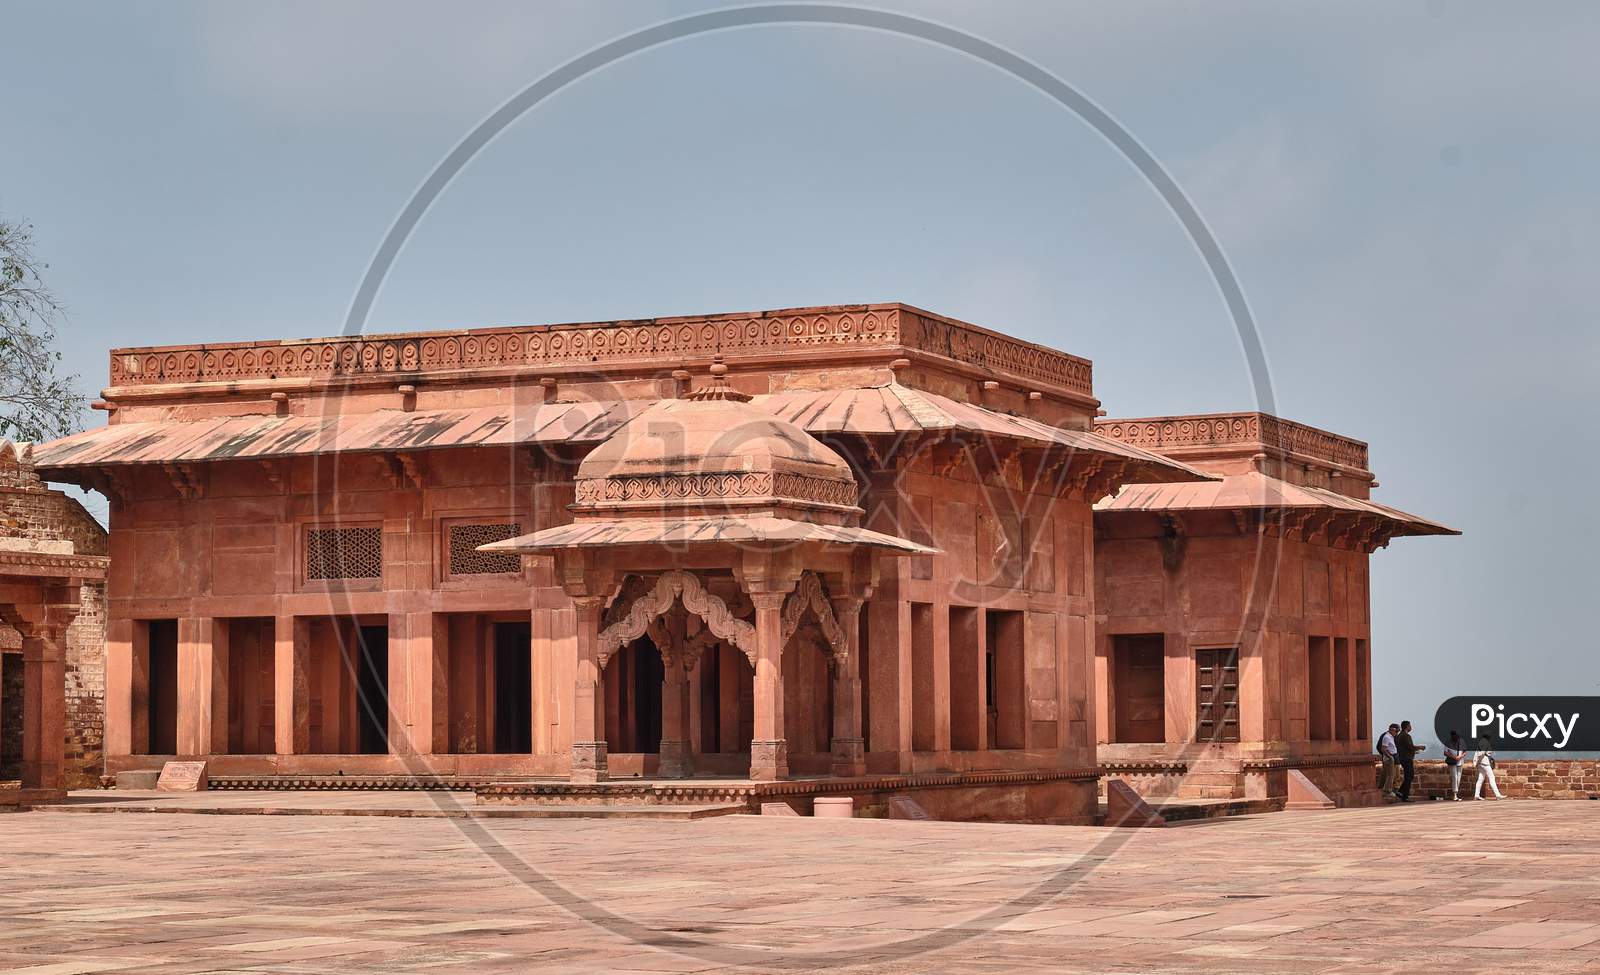 Red Fort Delhi Is A Red Sandstone Fort City Built During The Mughal Regime.